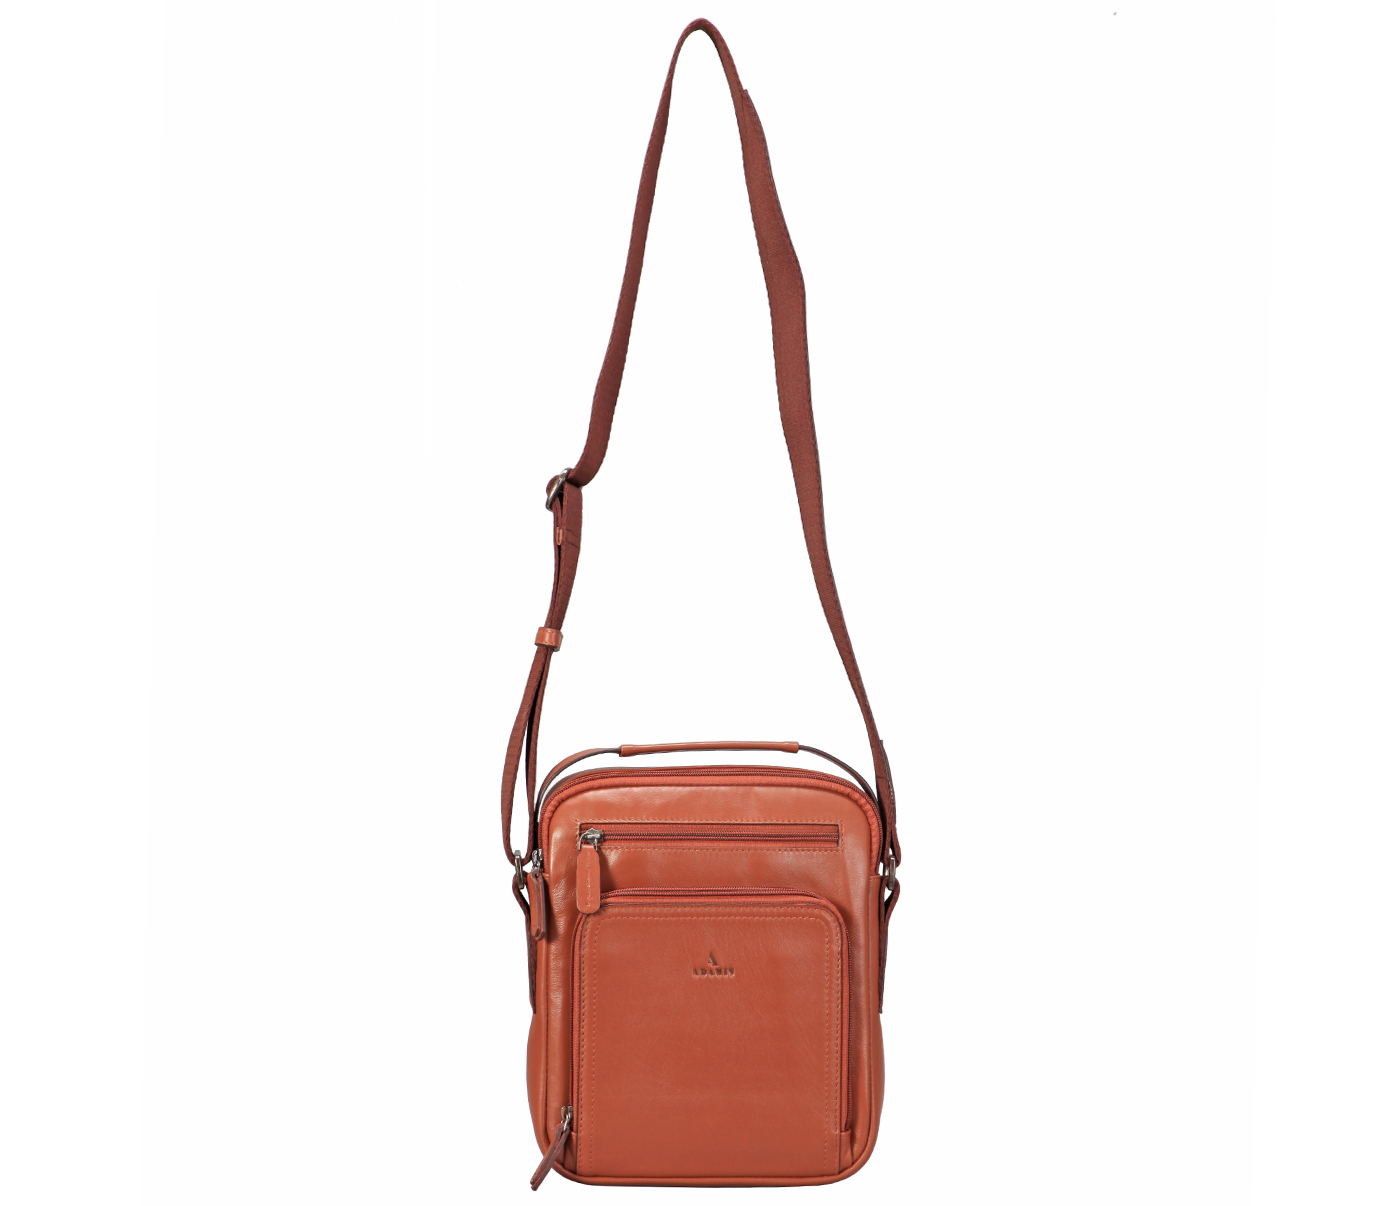 P38-Rafael-Men's travel pouch in Genuine Leather - Tan